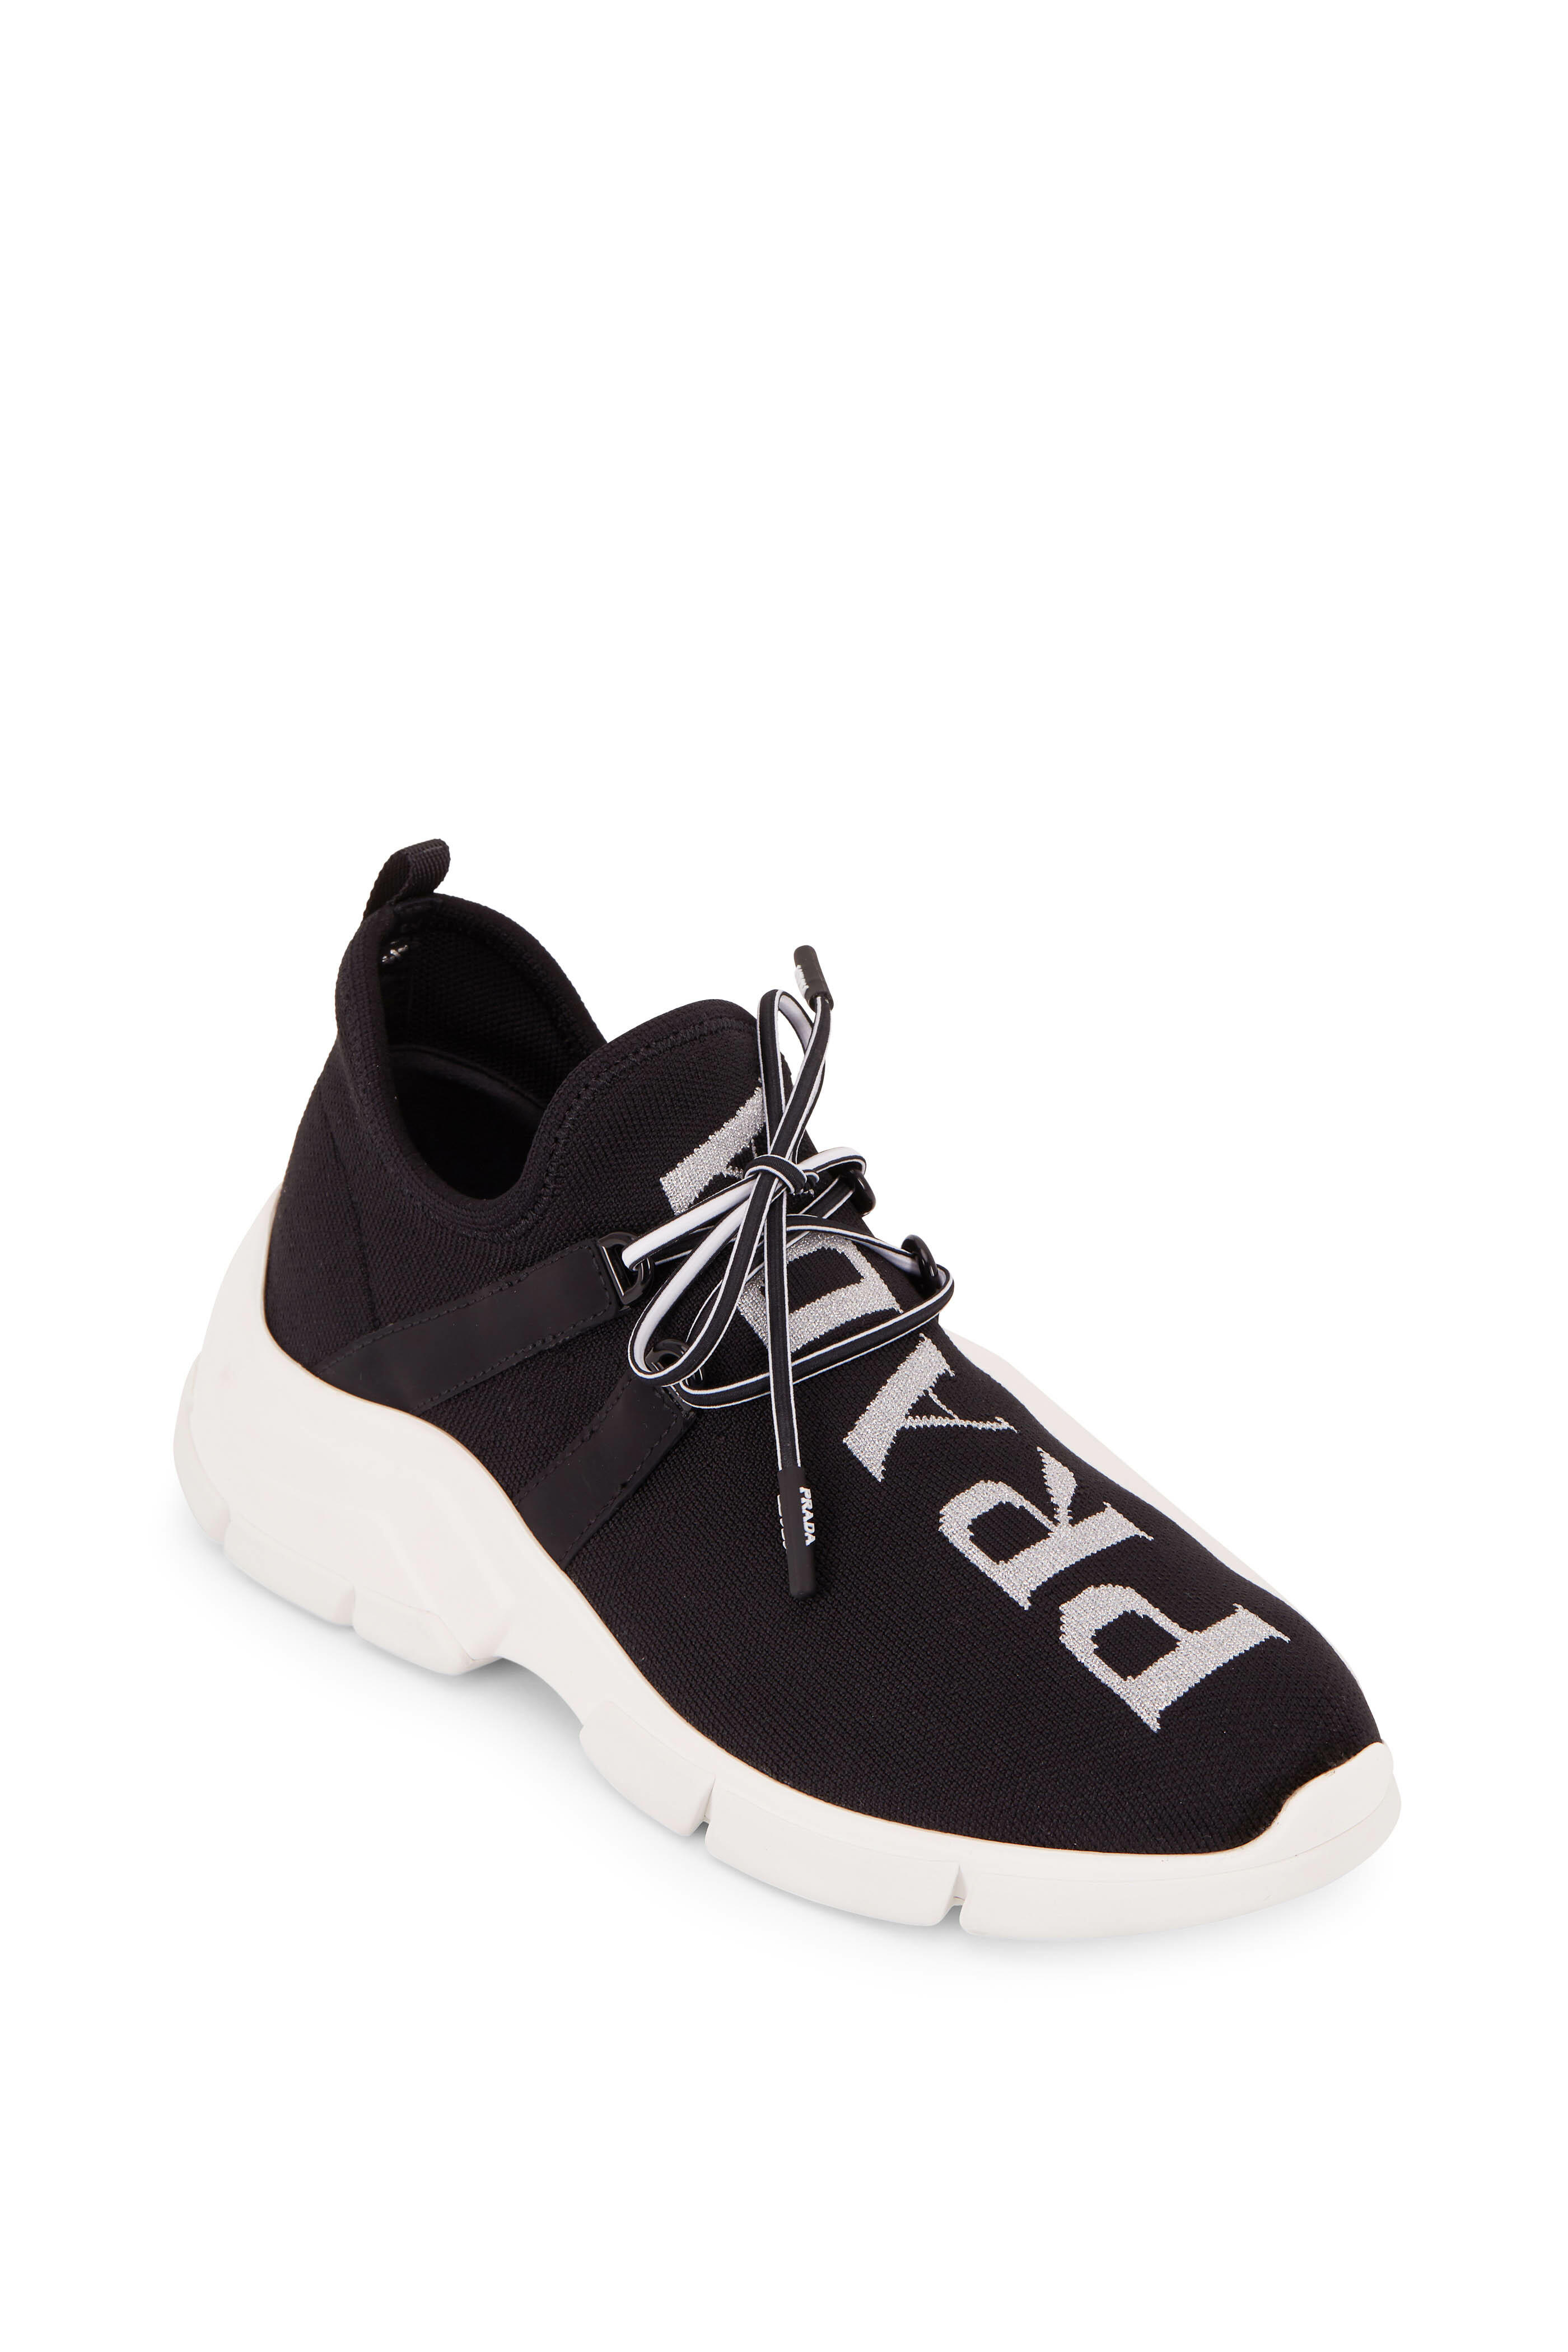 Prada Black Sport Knit 10 Sneakers, $725, SSENSE